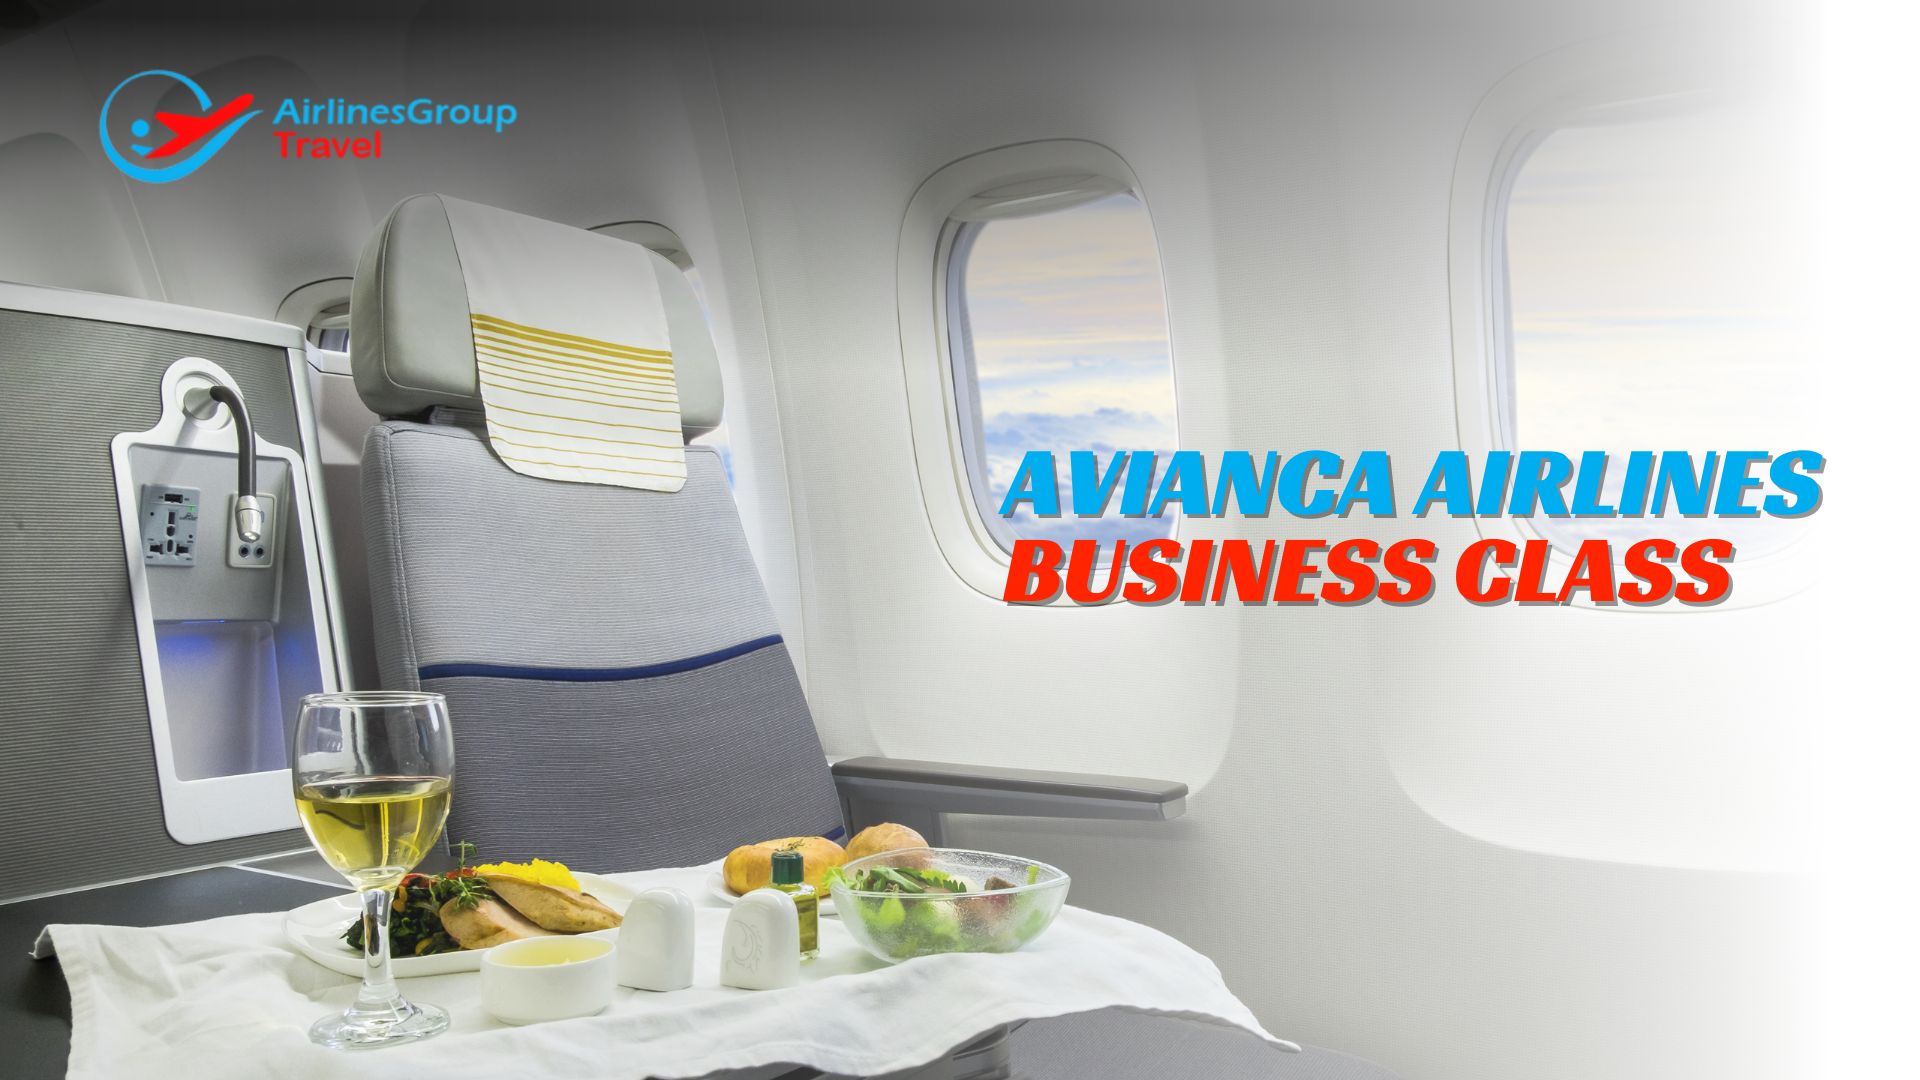 Avianca Airlines Business Class